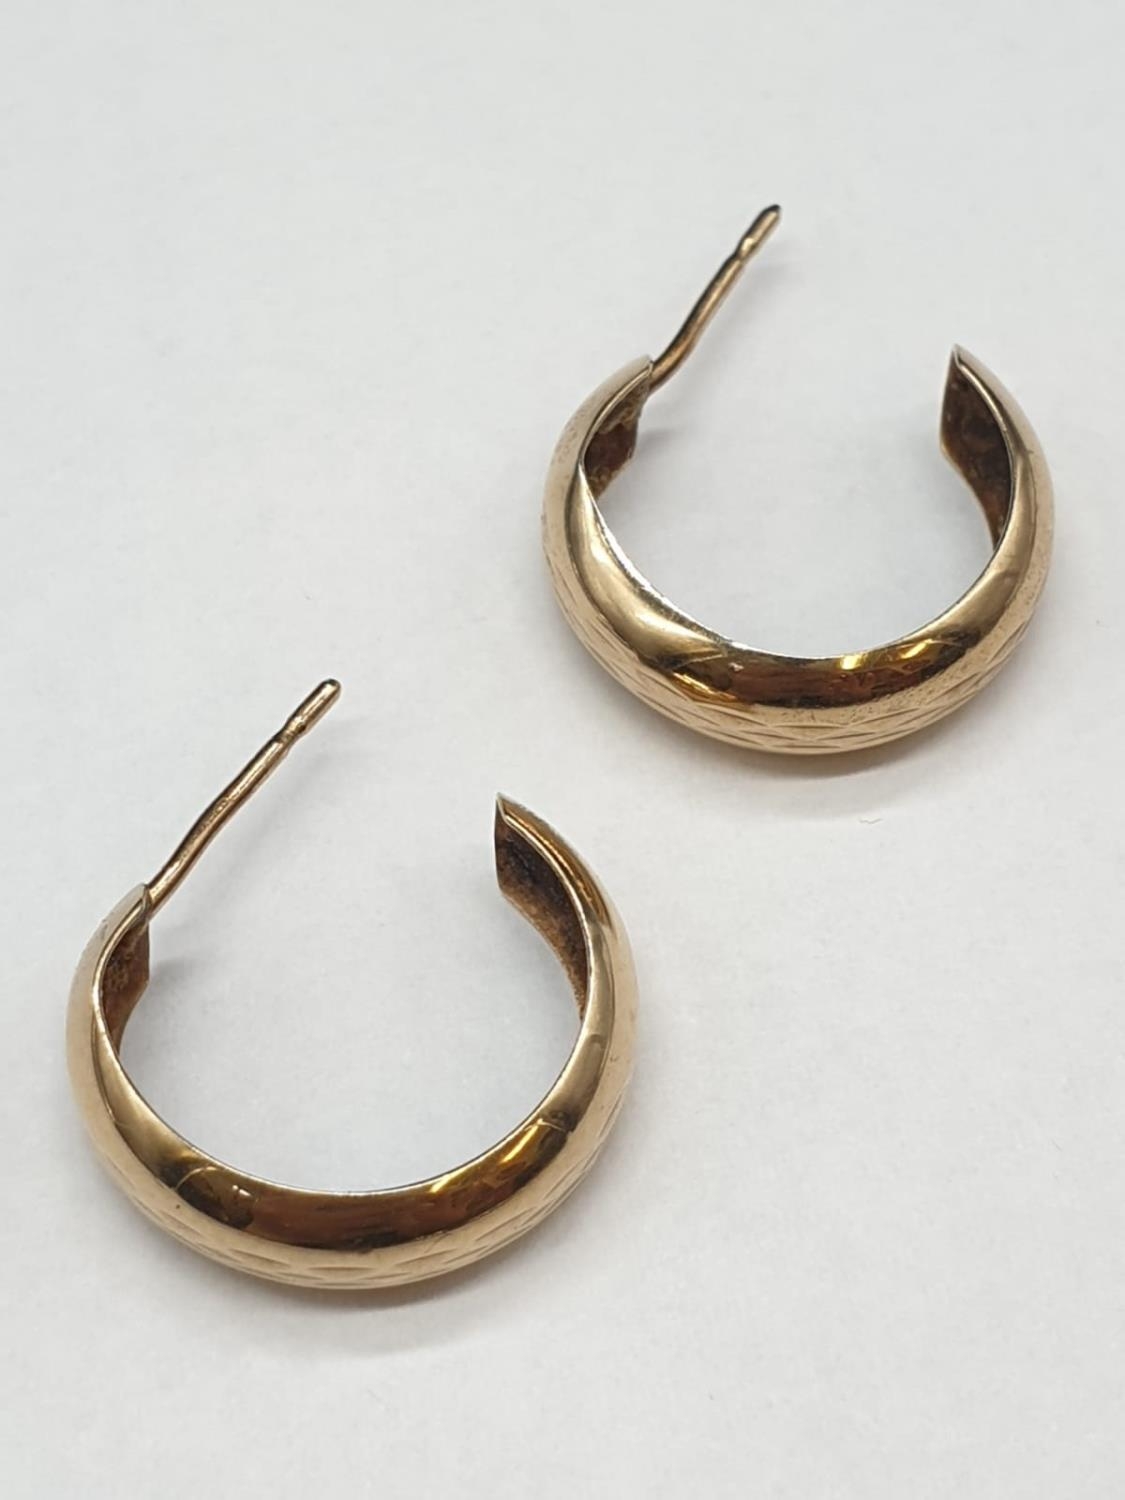 A Pair of 9ct Gold Basic Hoop Earrings 1.3g - Image 2 of 3